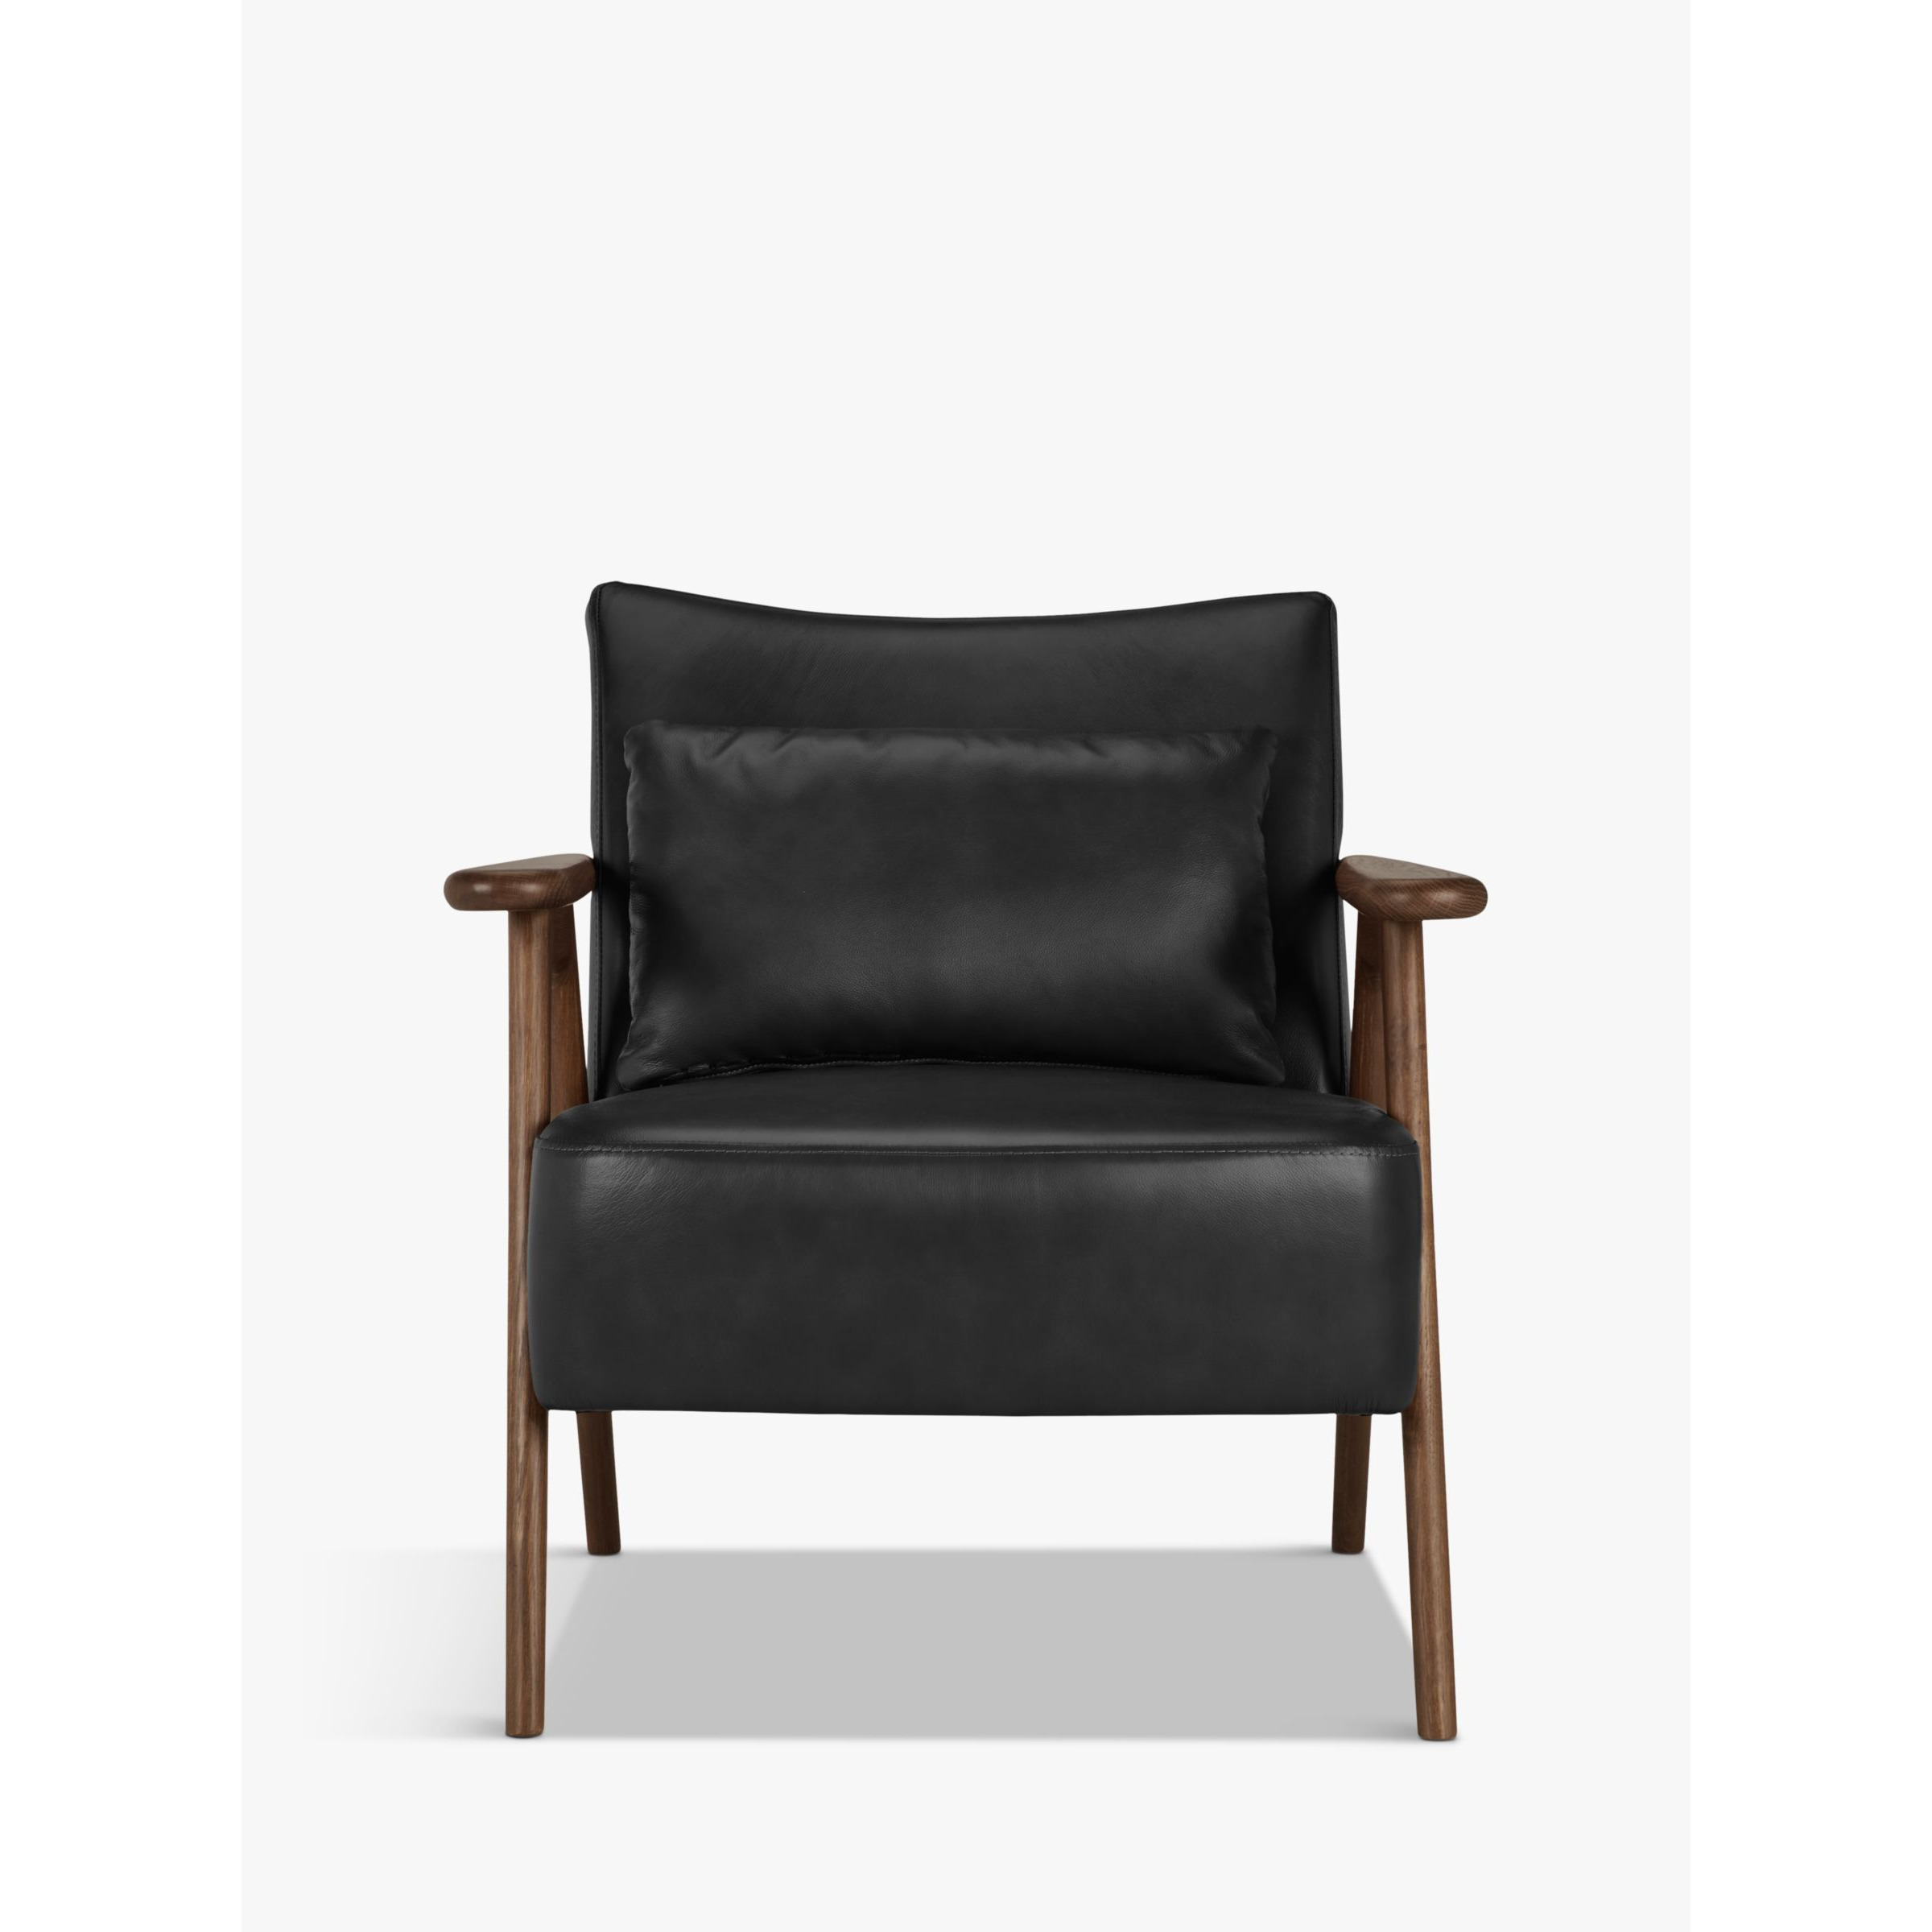 John Lewis Hendricks Leather Armchair, Dark Wood Frame - image 1